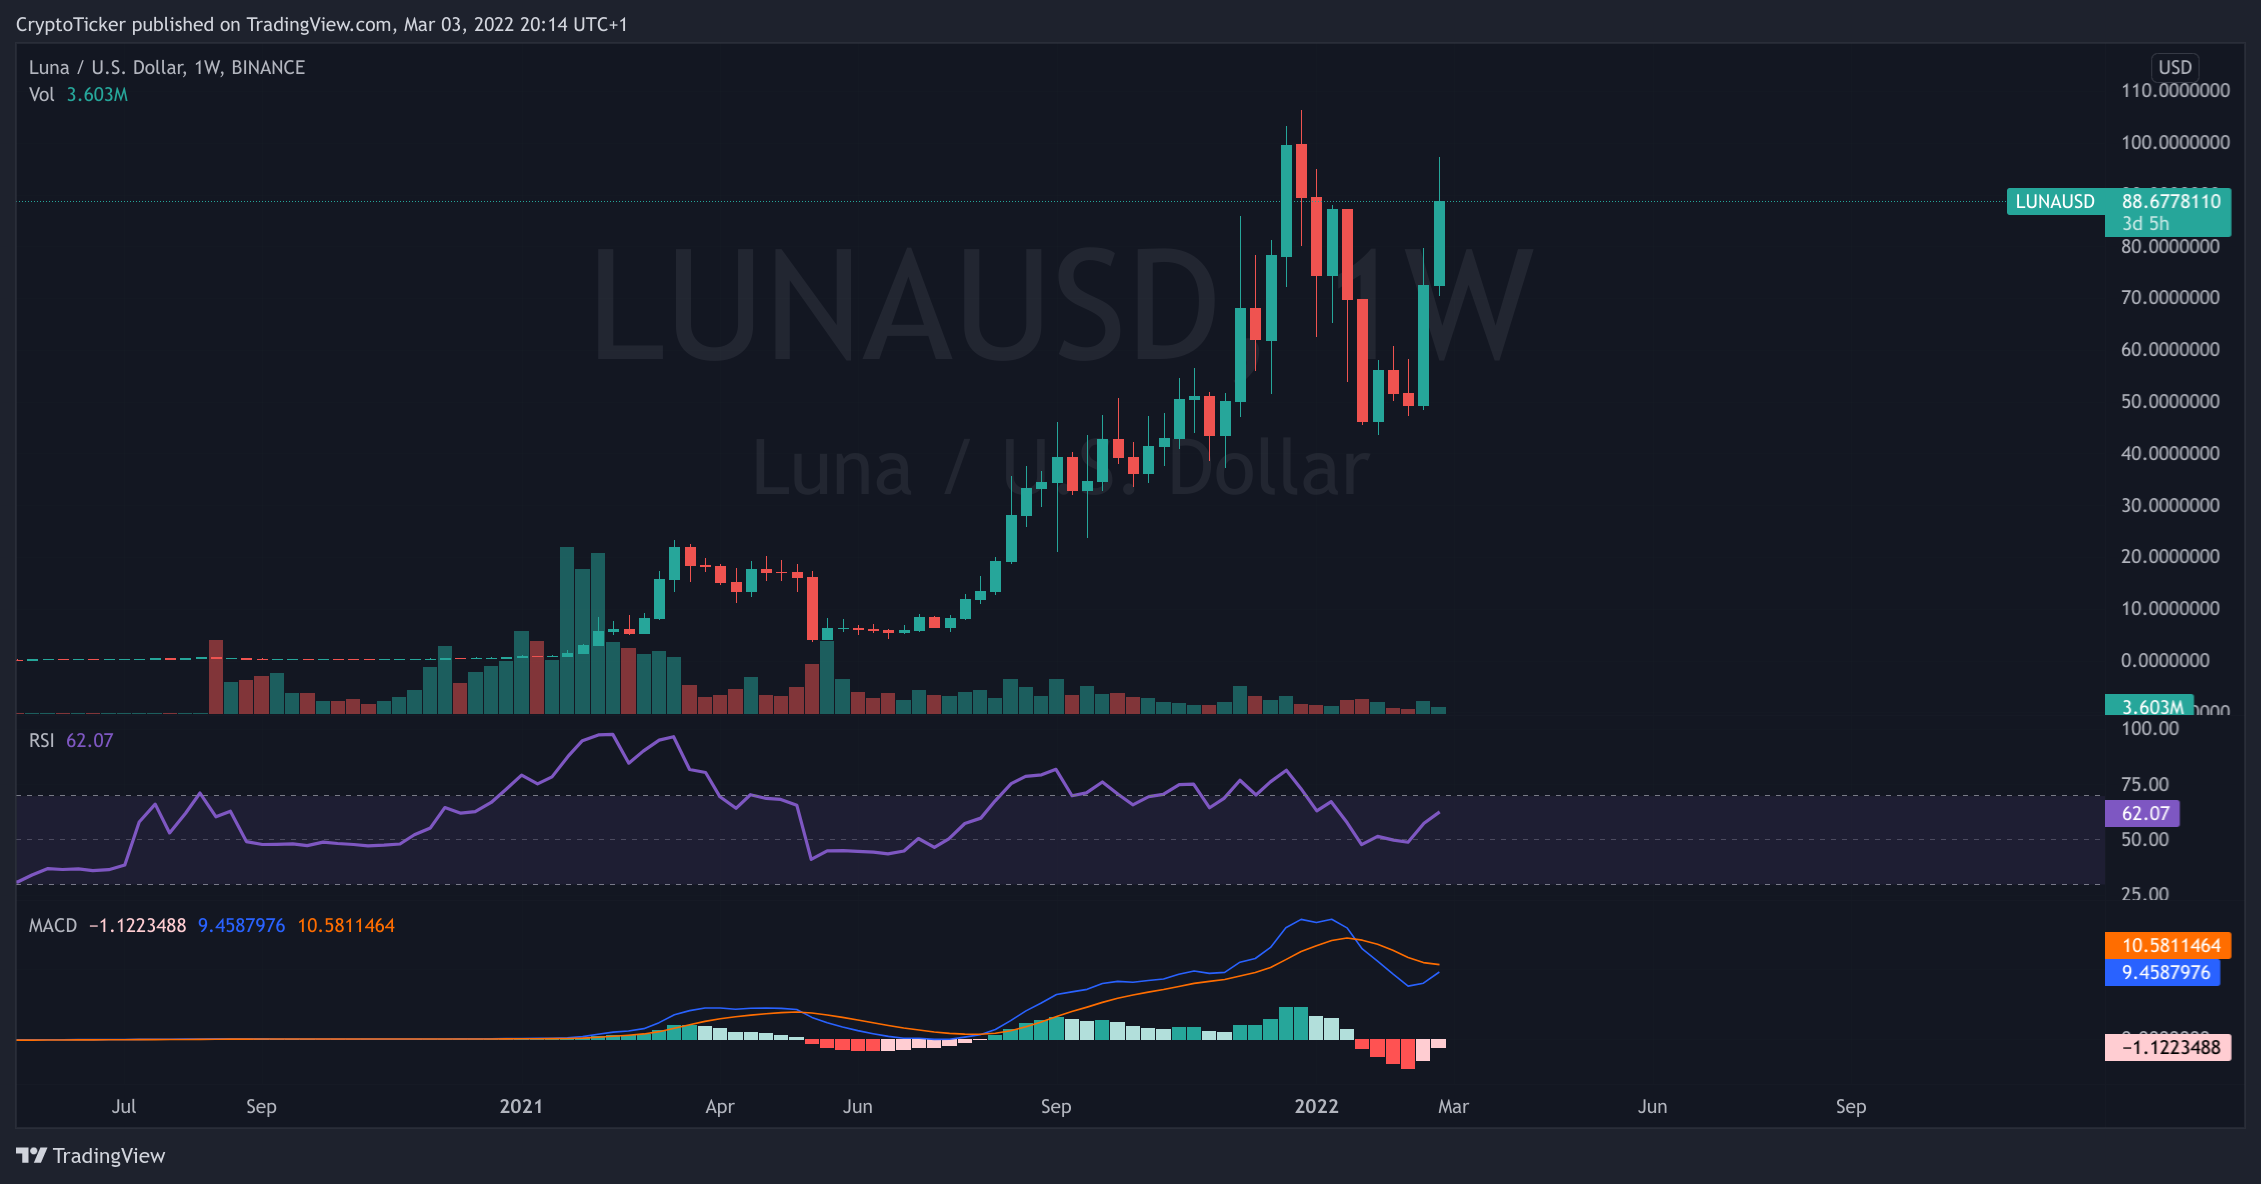 LUNA/USD 1-week chart showing LUNA's constant rise